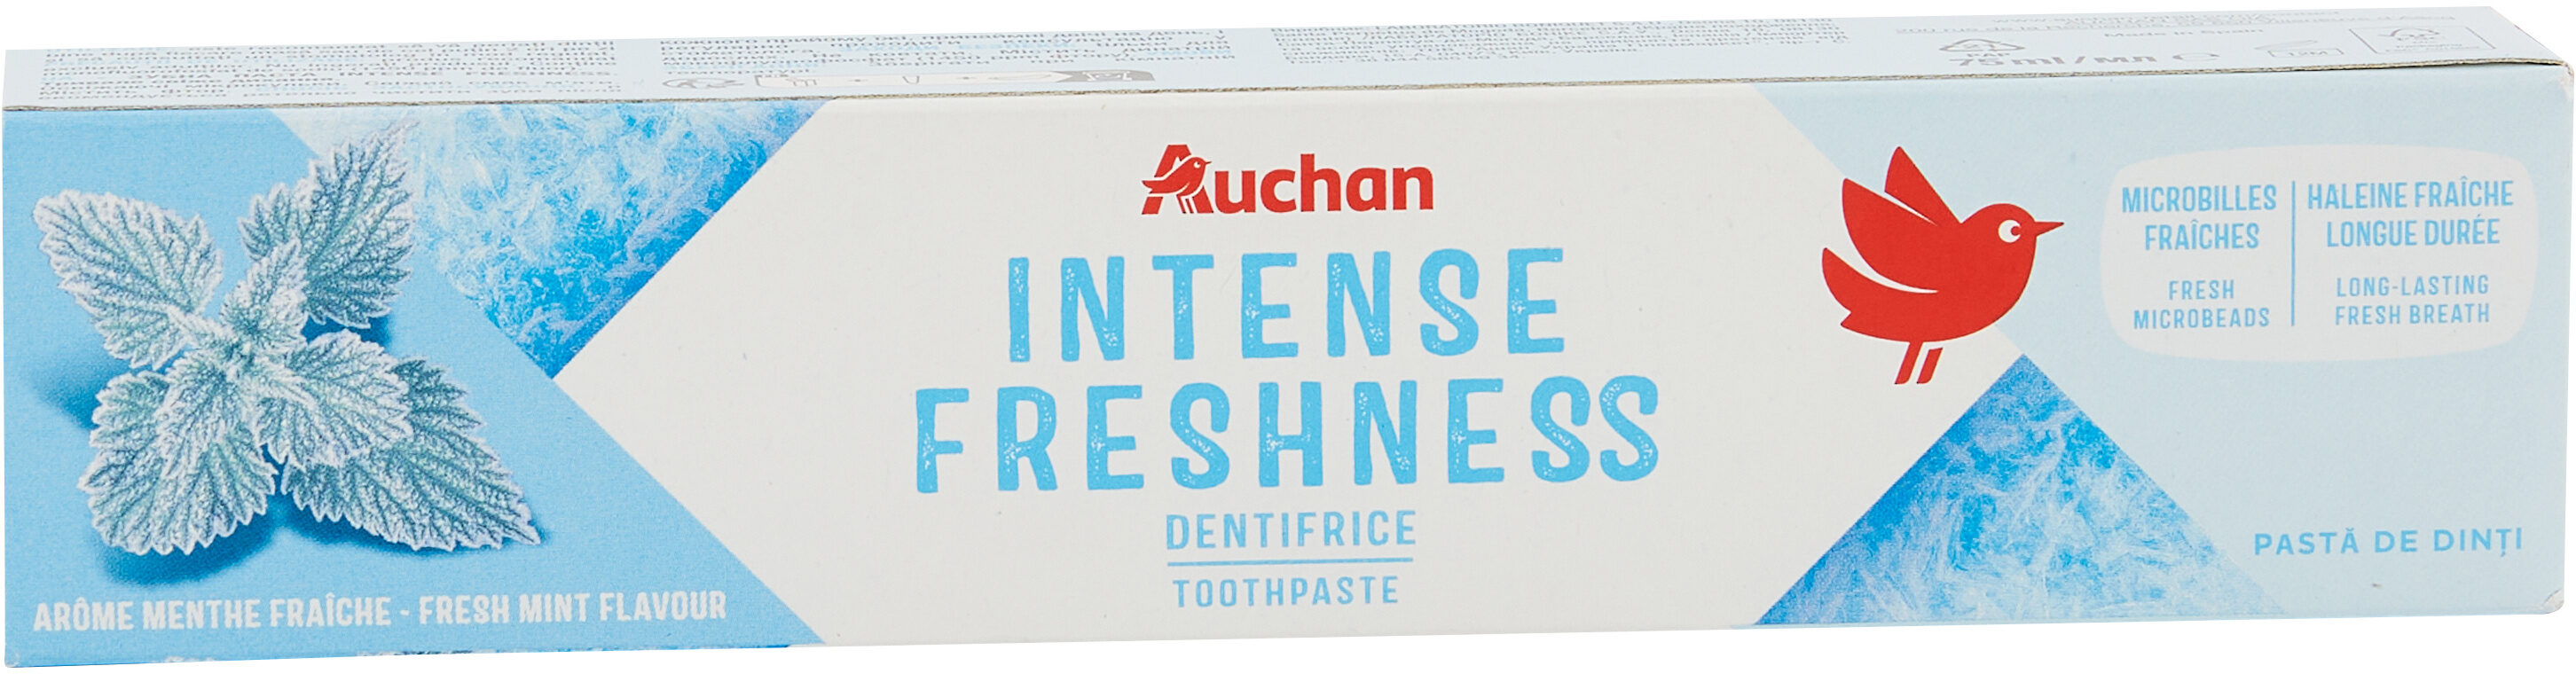 Auchan dentifrice fraîcheur intense tube 75ml - Product - fr